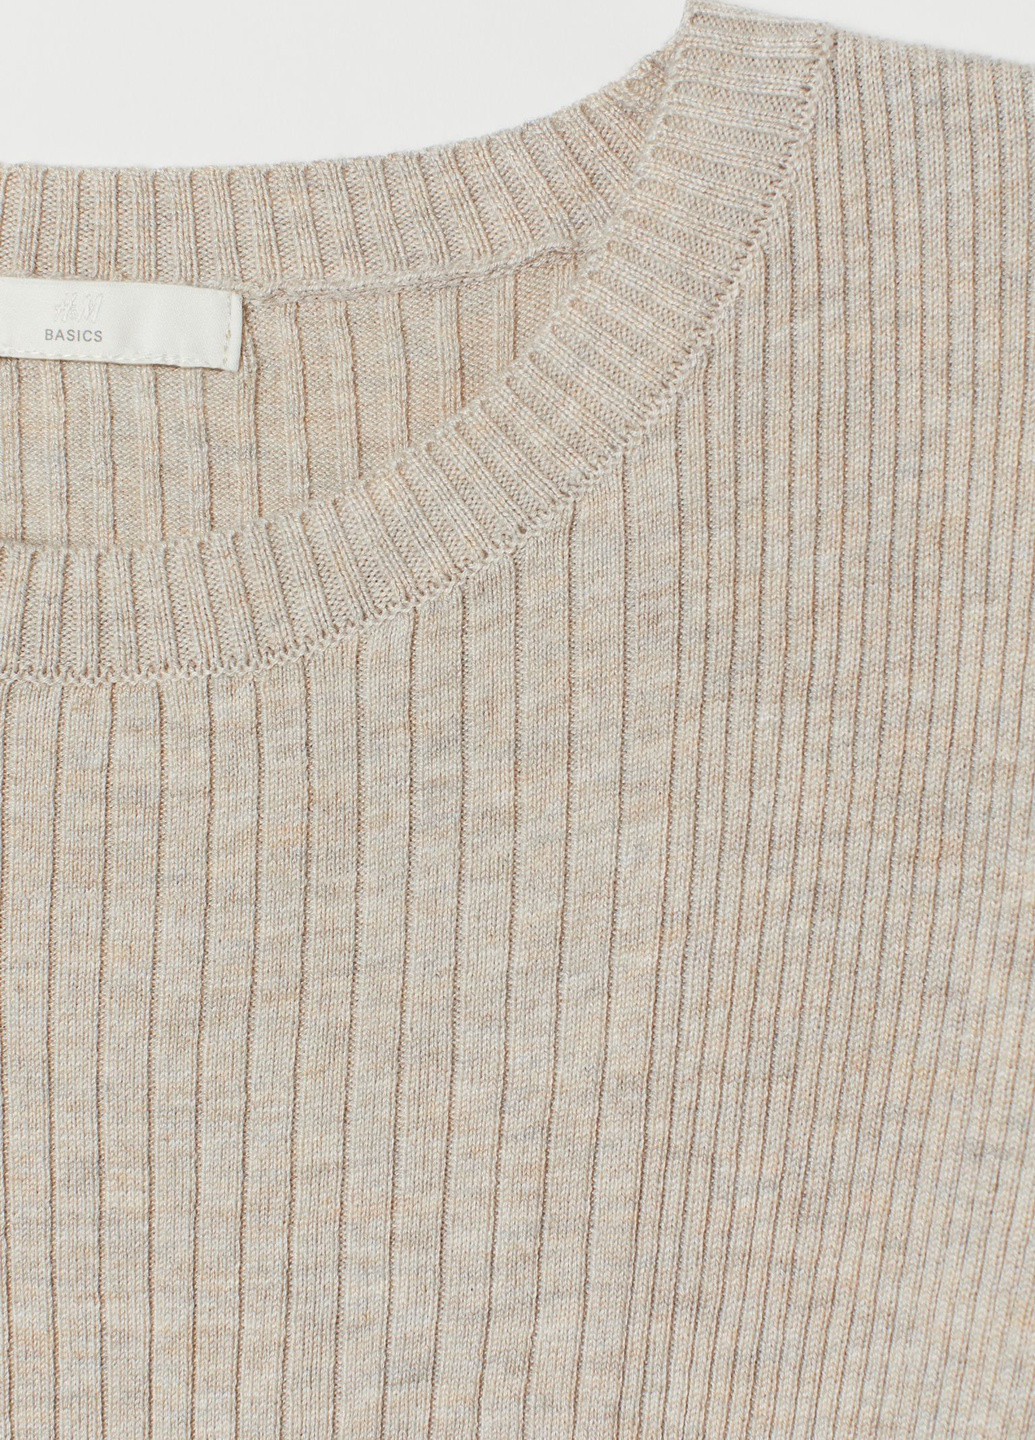 Светло-бежевый зимний свитер H&M